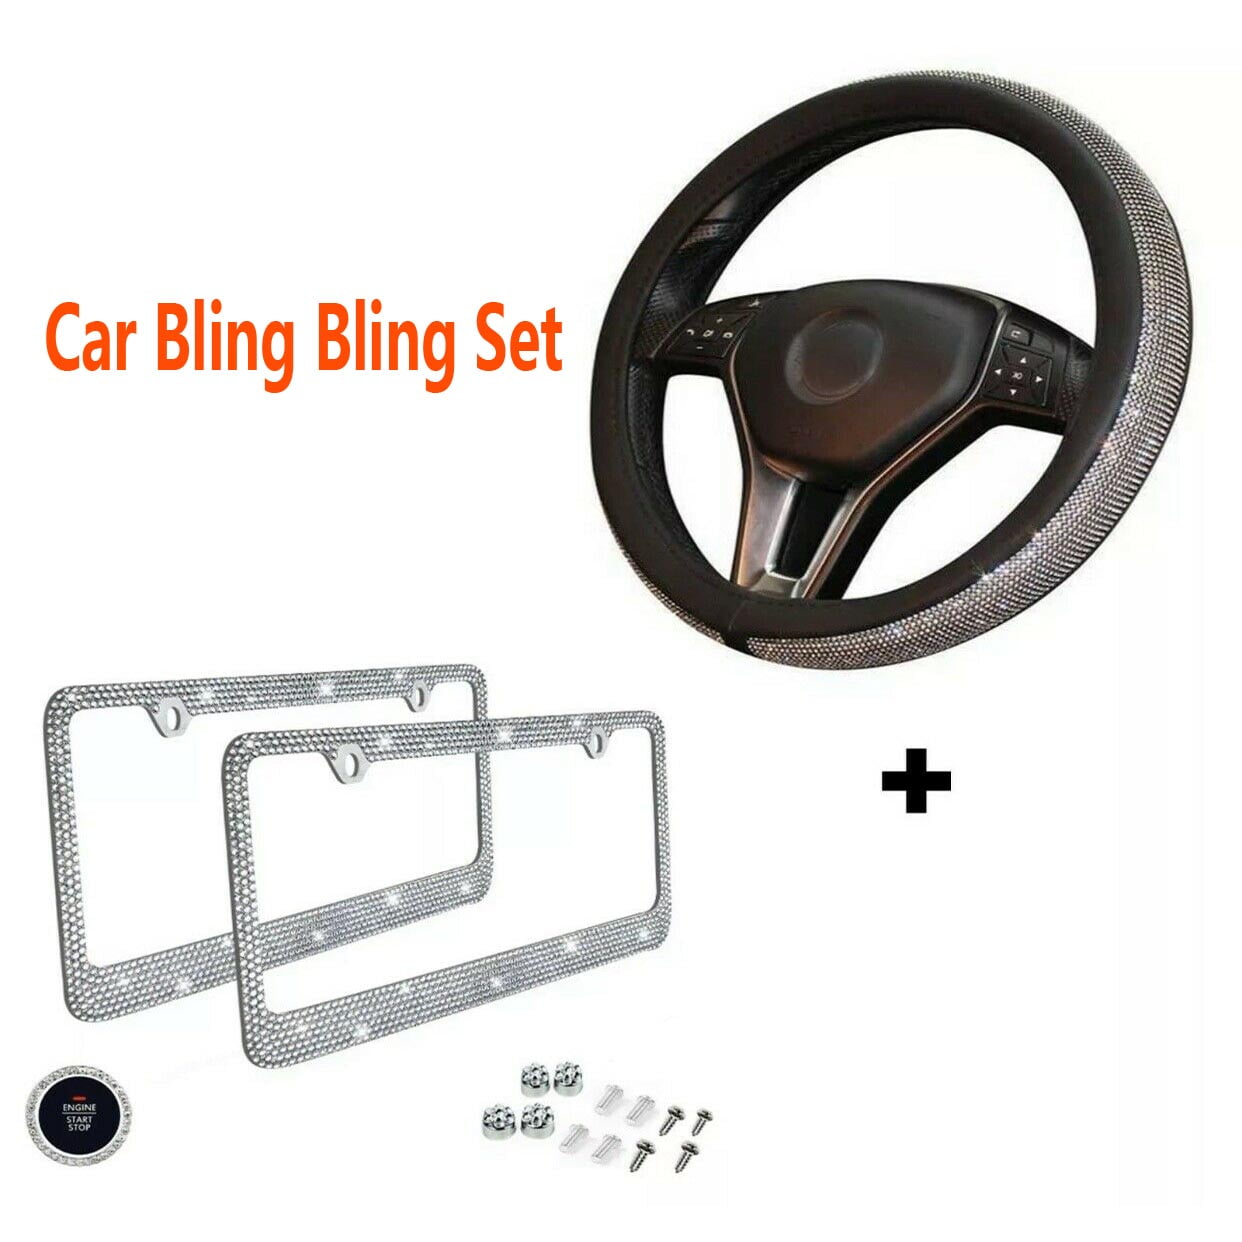 5 Pack Bling Car Accessories Set, Bling Steering Wheel Cover for Women  Universal Fit 15 Inch, Bling License Plate Frame for Women, Bling Dual USB  Car